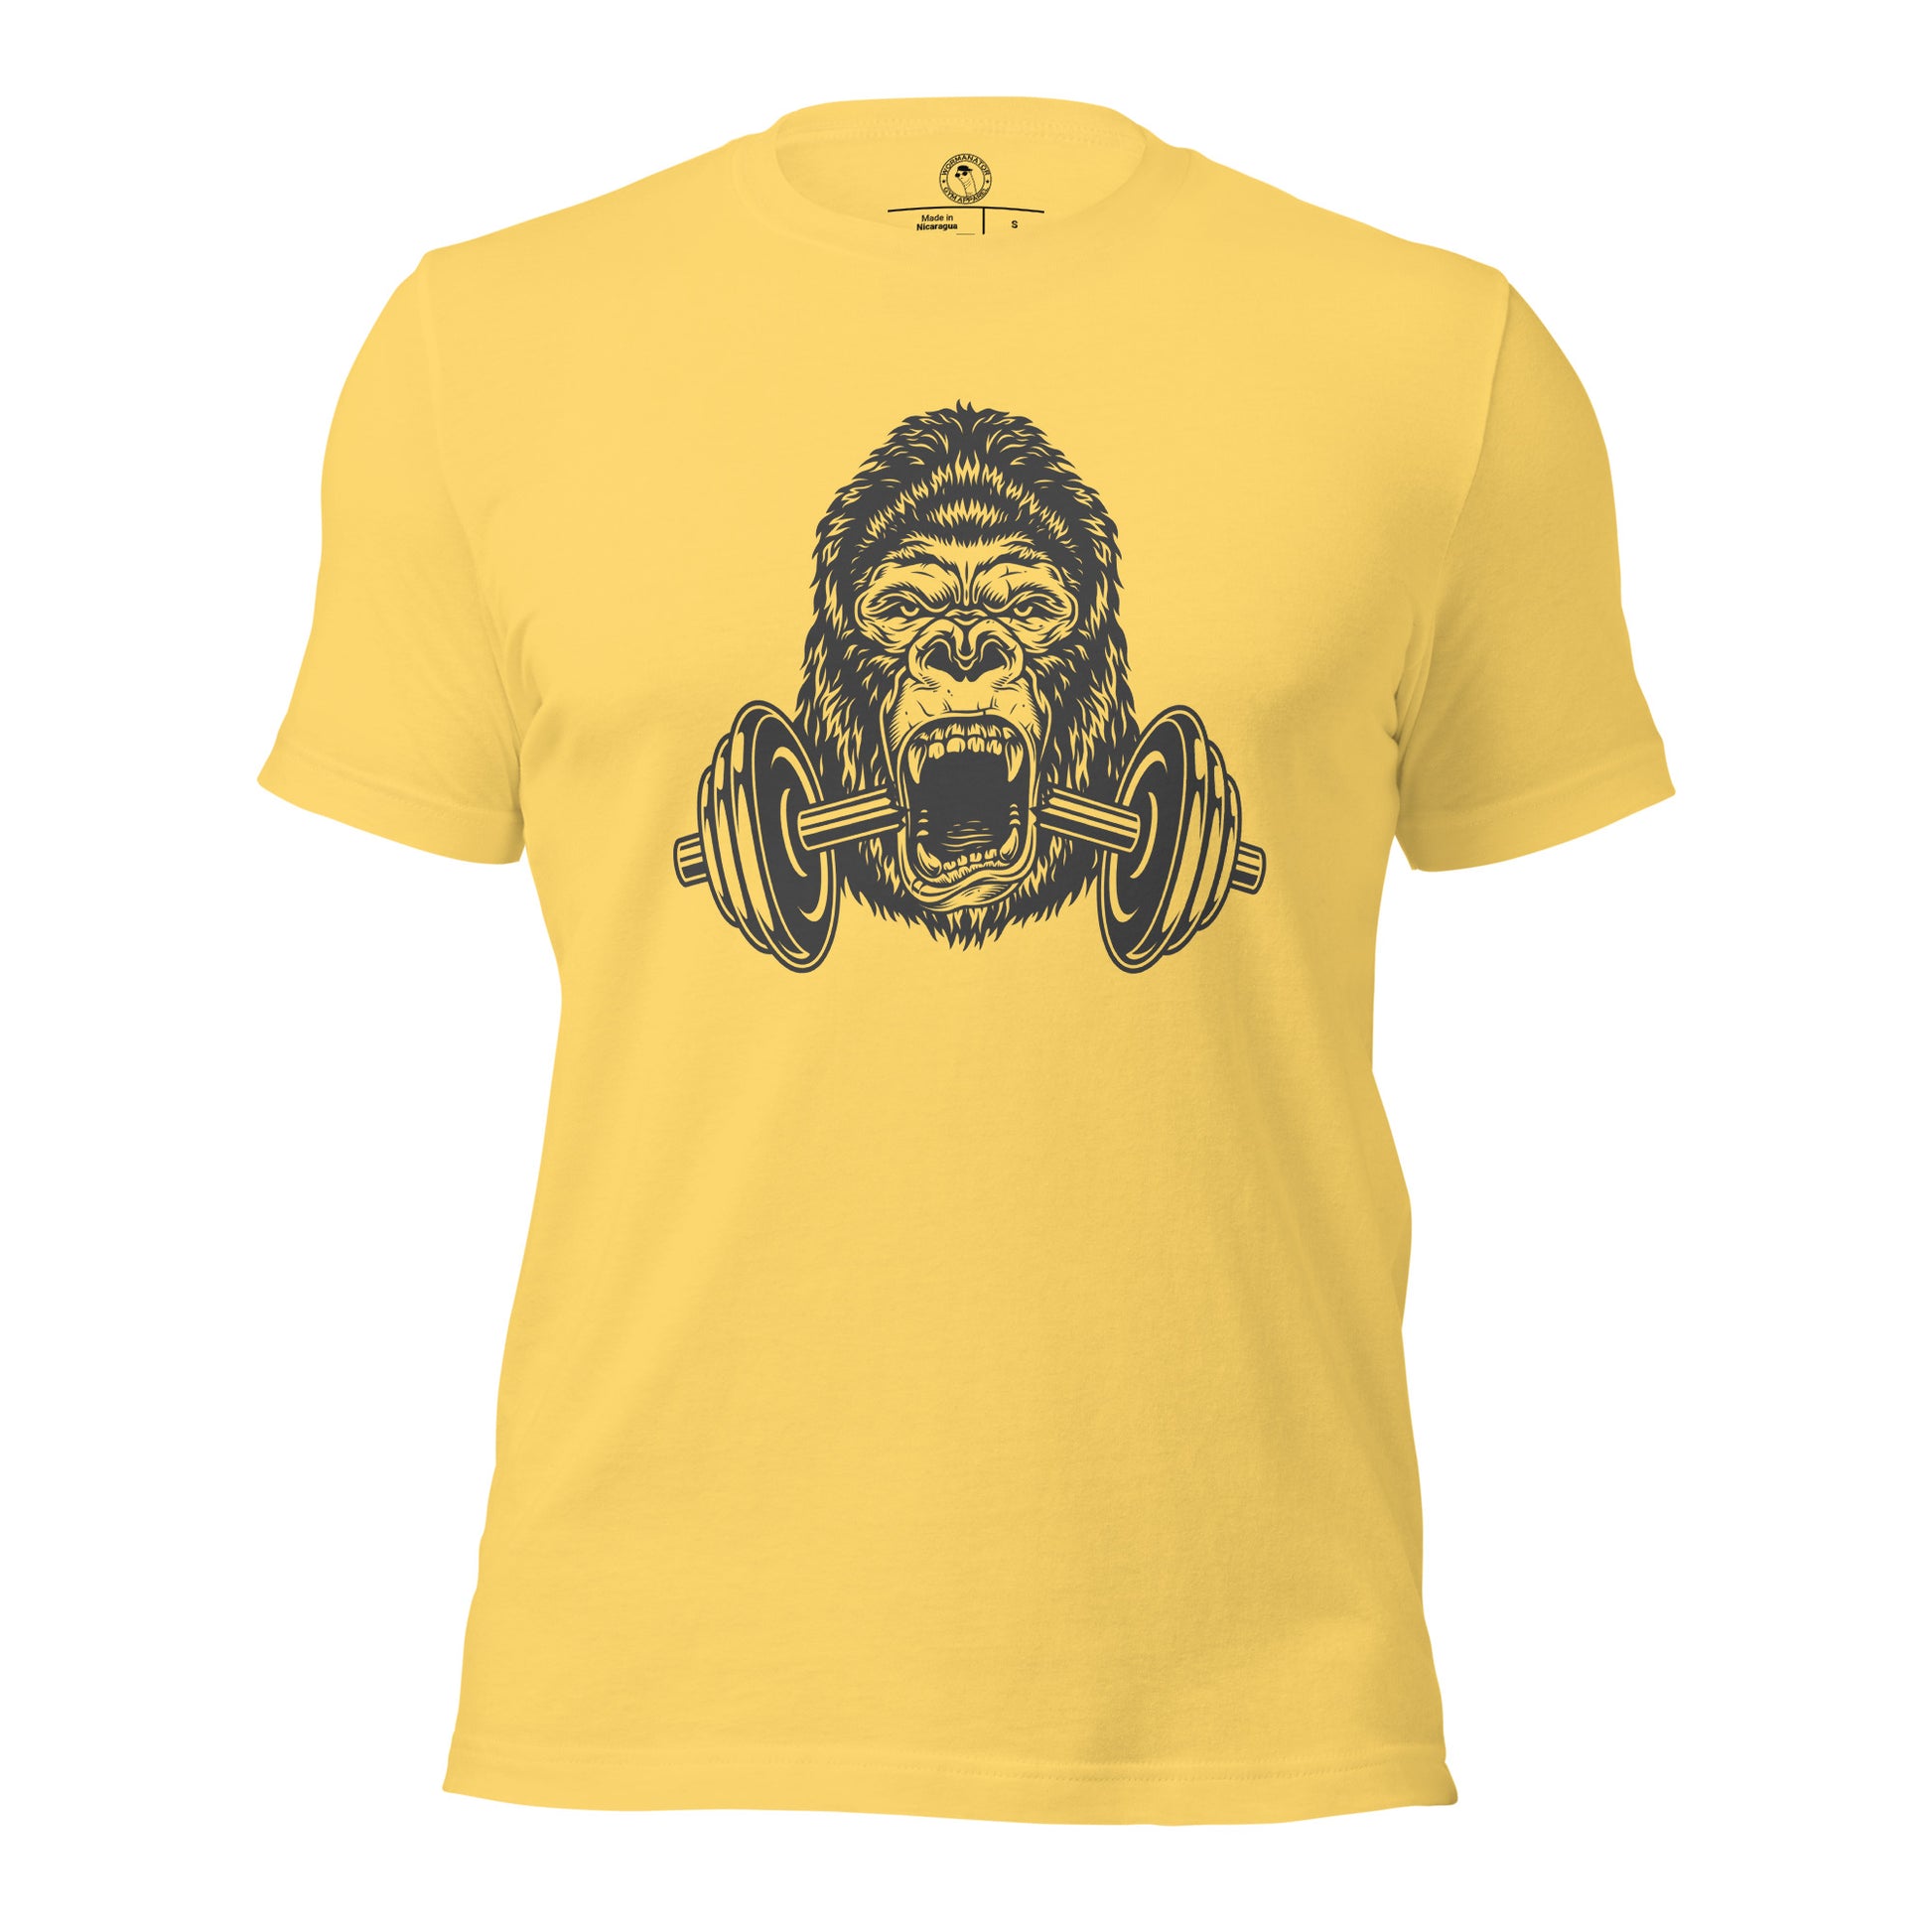 Gorilla Workout Shirt in Yellow